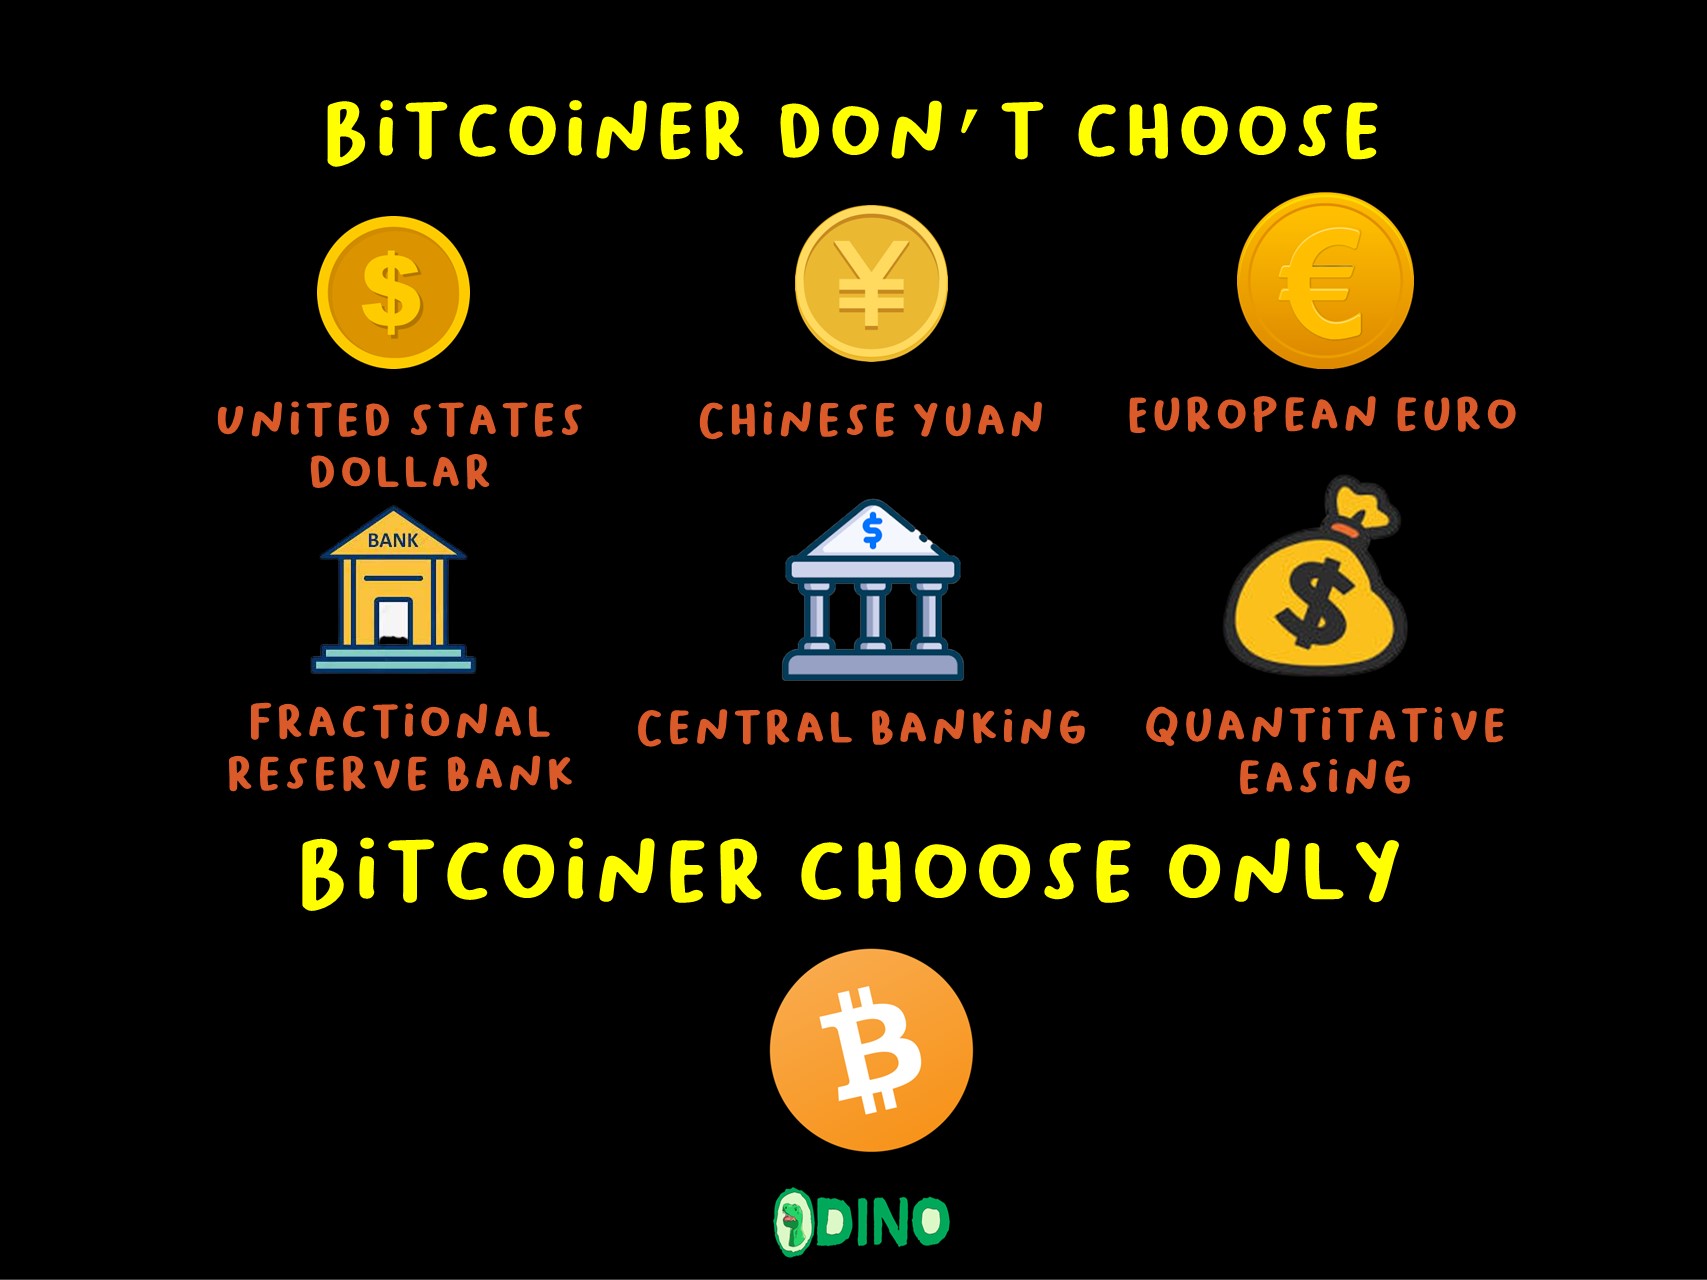 Bitcoiner Don’t Choose